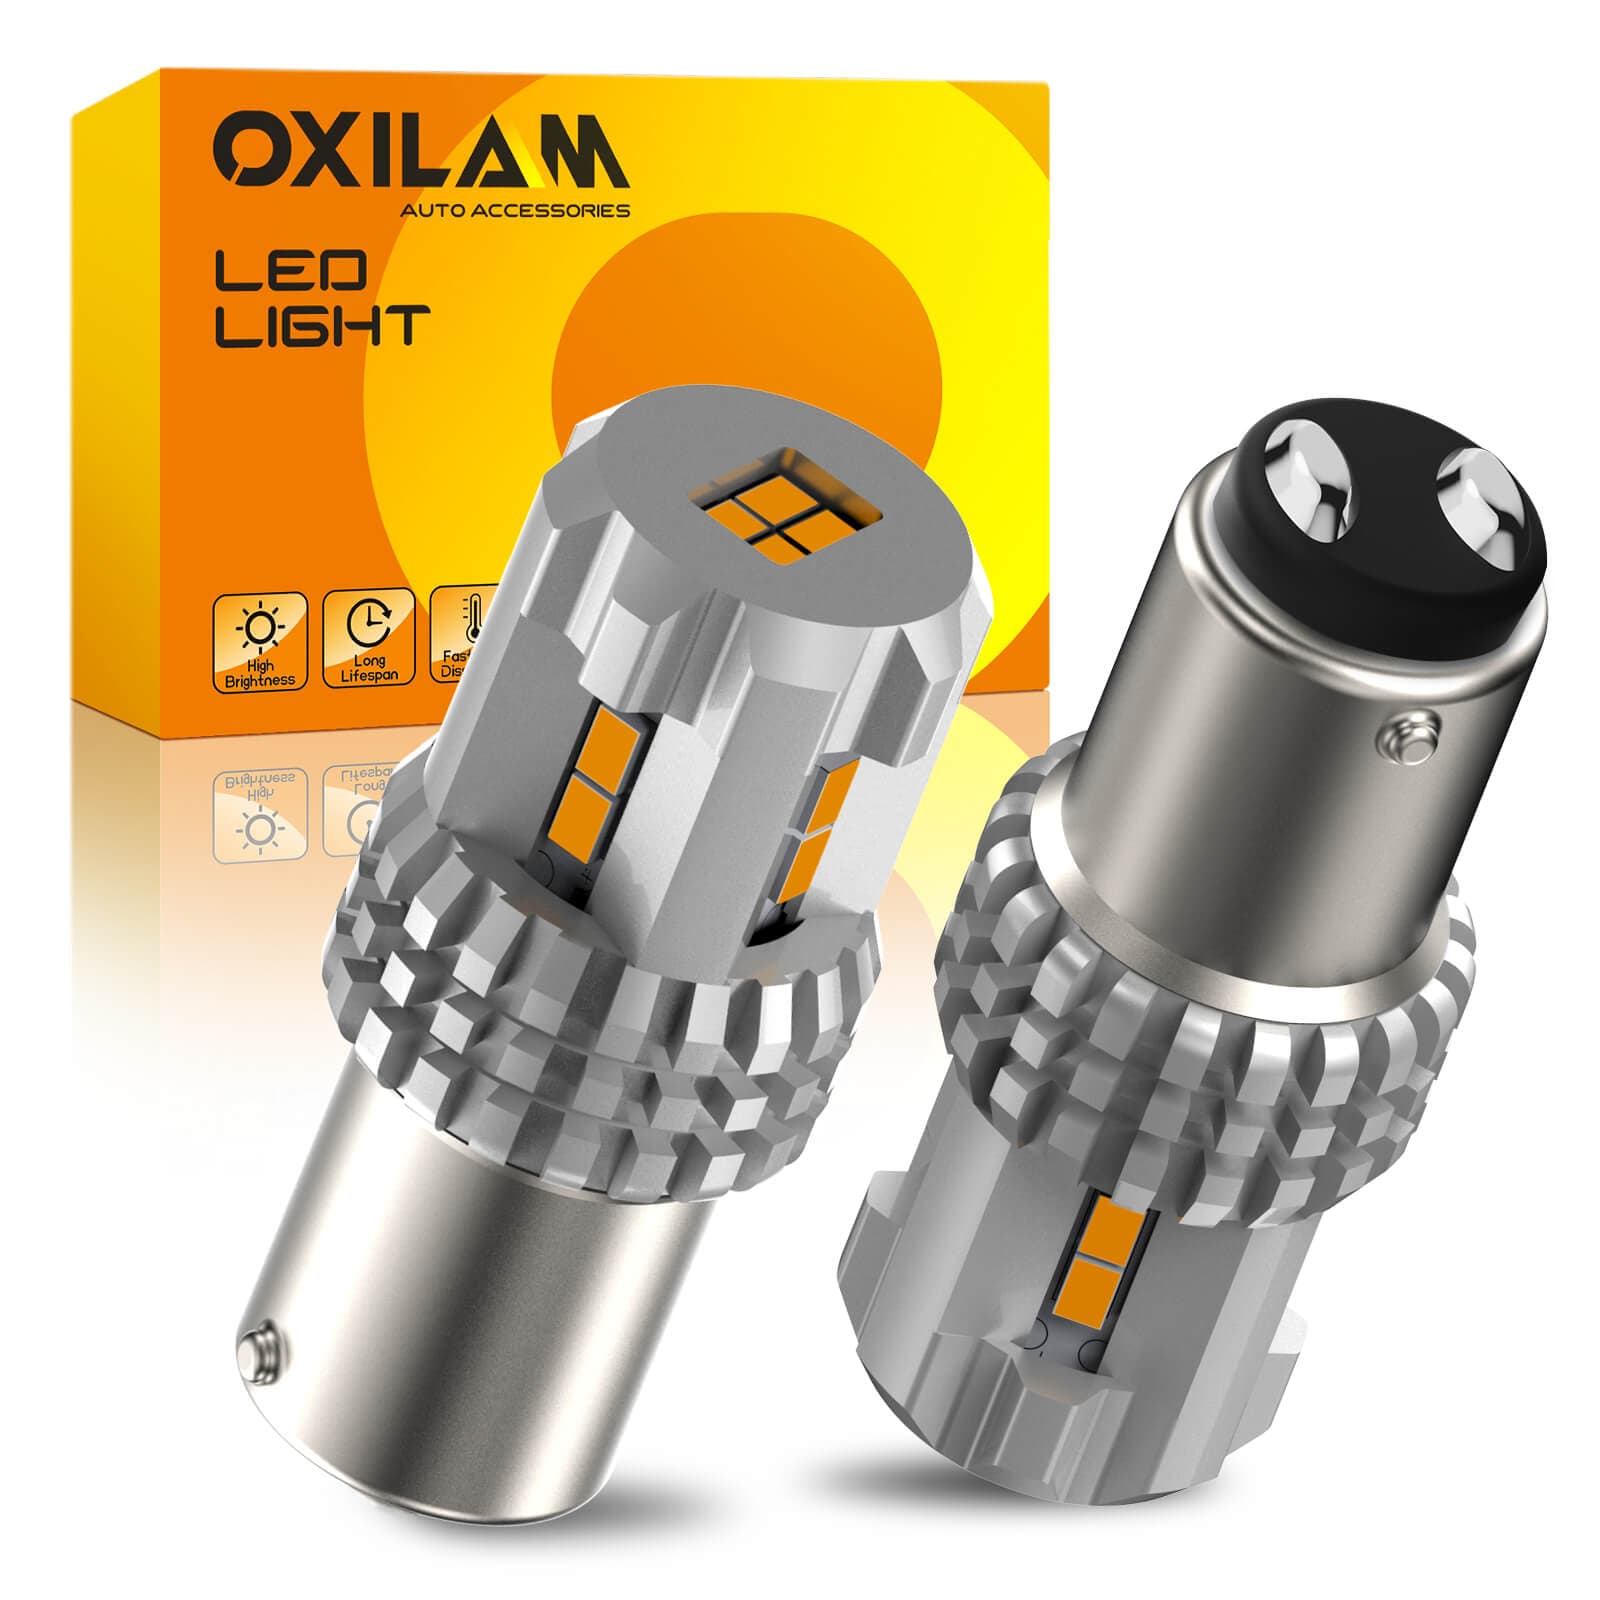 Oxilam Motor Vehicle Lighting OXILAM 1157 2057 2357 7528 BAY15D LED Bulb Amber Yellow Replacement for Turn Signal Light, Brake Lights, Tail Lights, Blinker Lights, Side Marker Light Extremely Bright